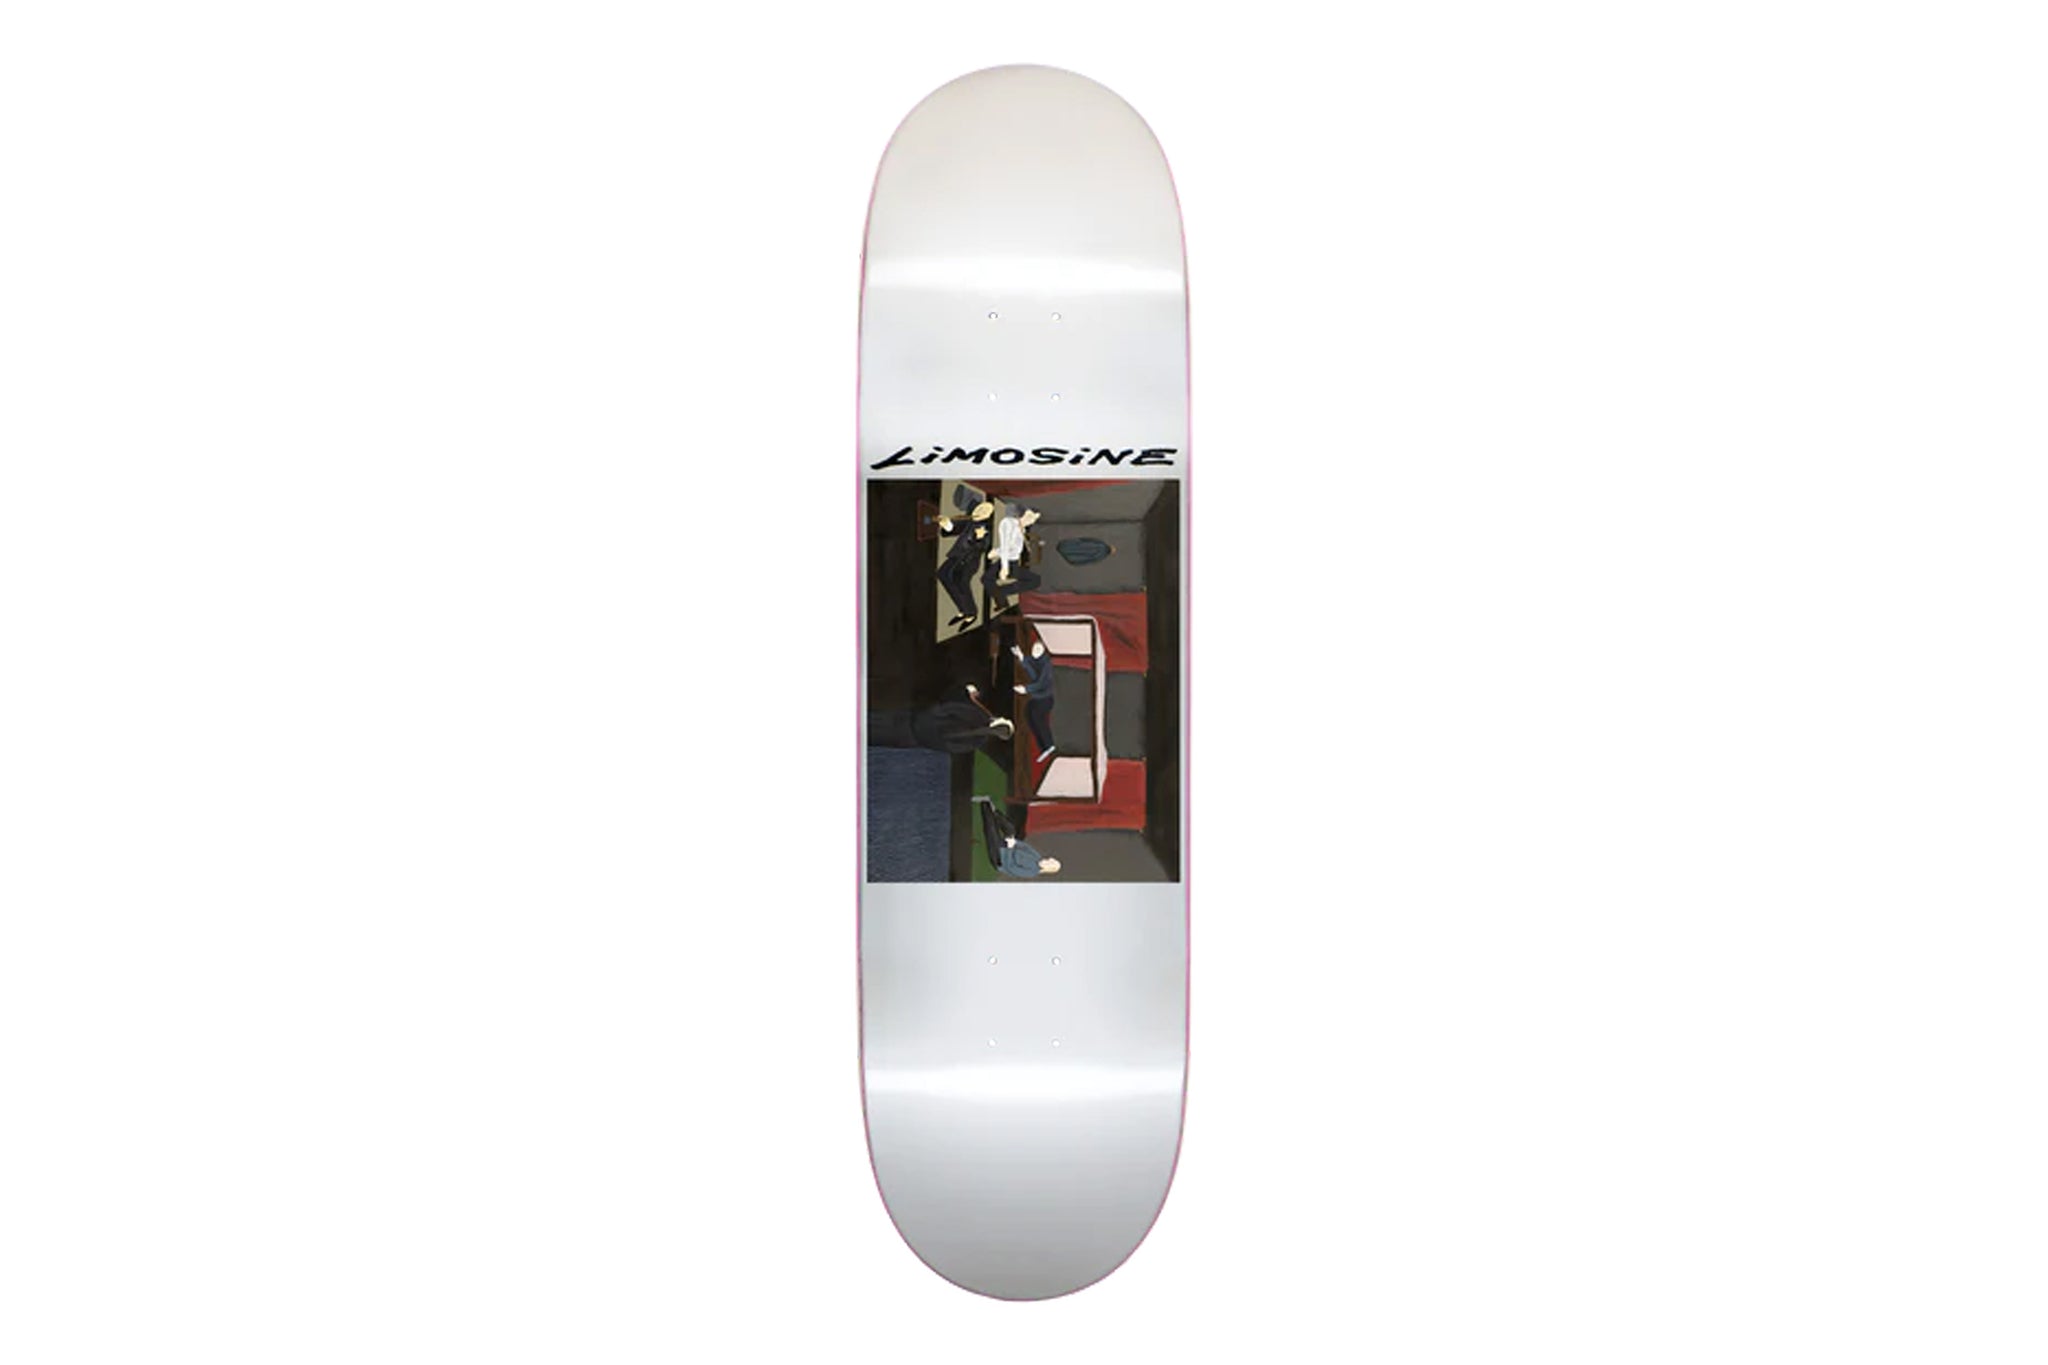 Limosine Opium Den / Max Palmer Skateboard